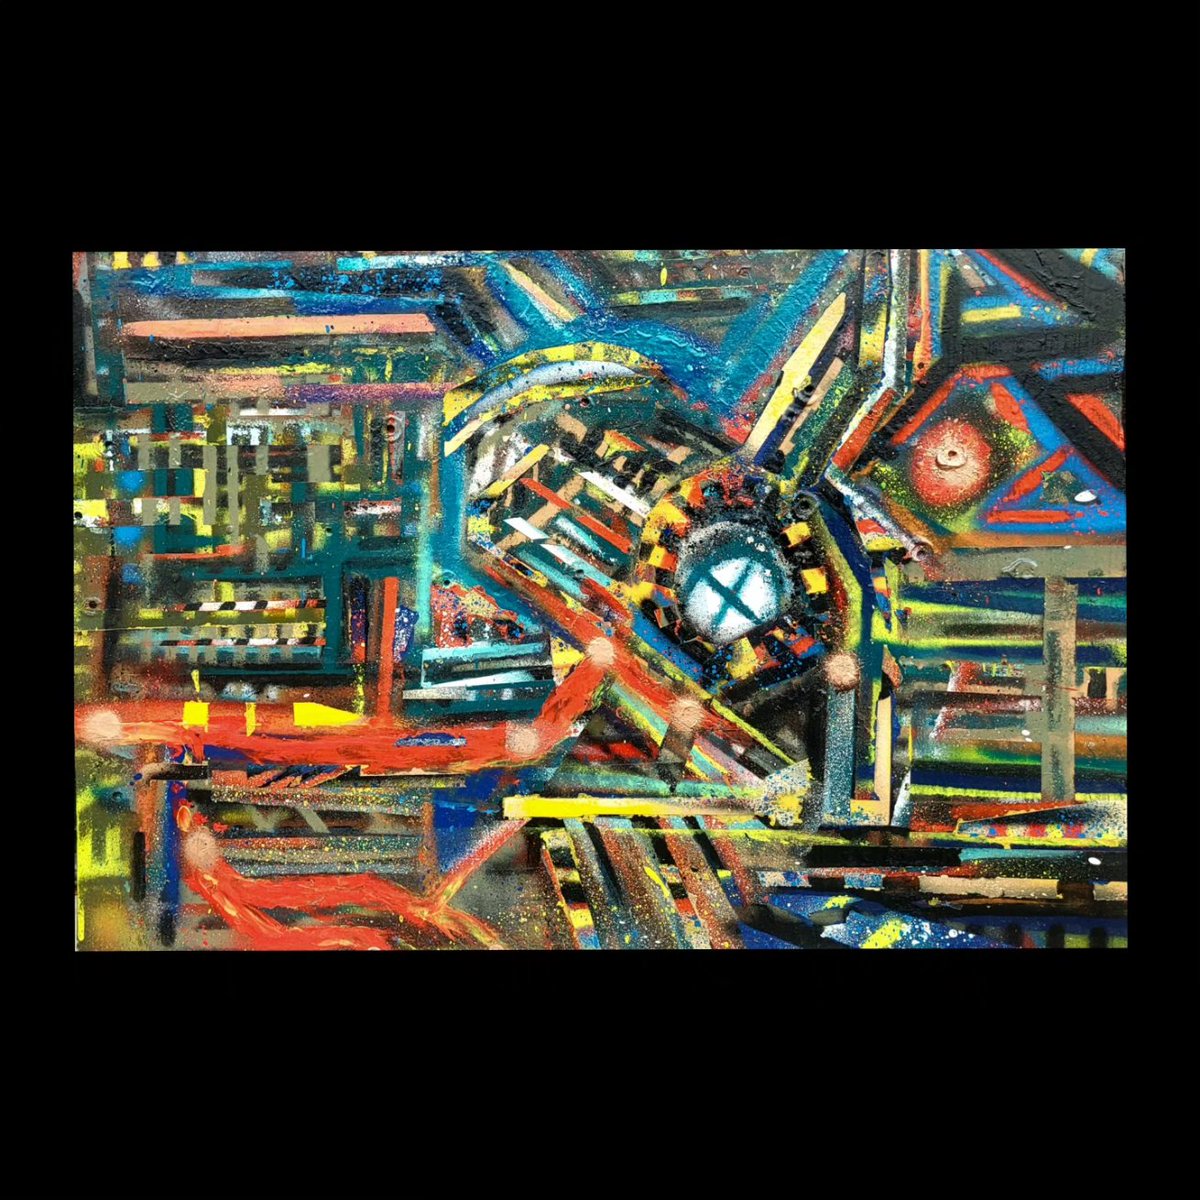 'Walkways'
Aerosol on 18' x 36' reclaimed aluminum sheet.
#visualart #painting #torontoartist #aerosol #aerosolart #spraypaint #spraycans #montanagold #mtn94 #molotow #abstract #contemporary #esoteric #futurism #scifiart #lsdart #artbrut #reclaimedart #roamshot #builduntilimgone